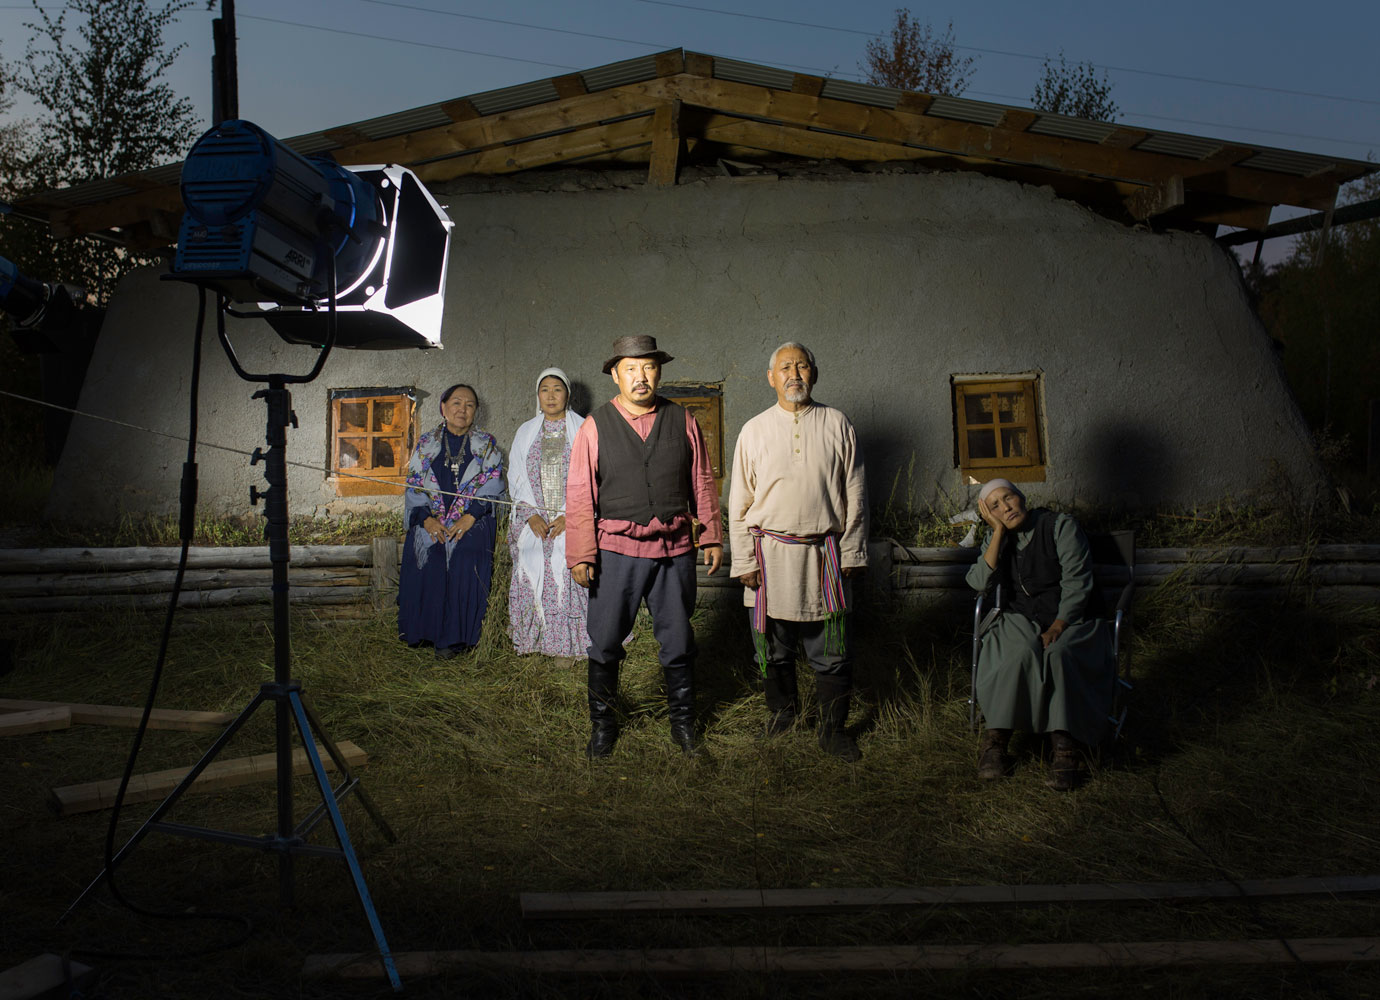 In Yakutia, movie-making is big business. Alexey Vasilyev photographs the visionaries behind it